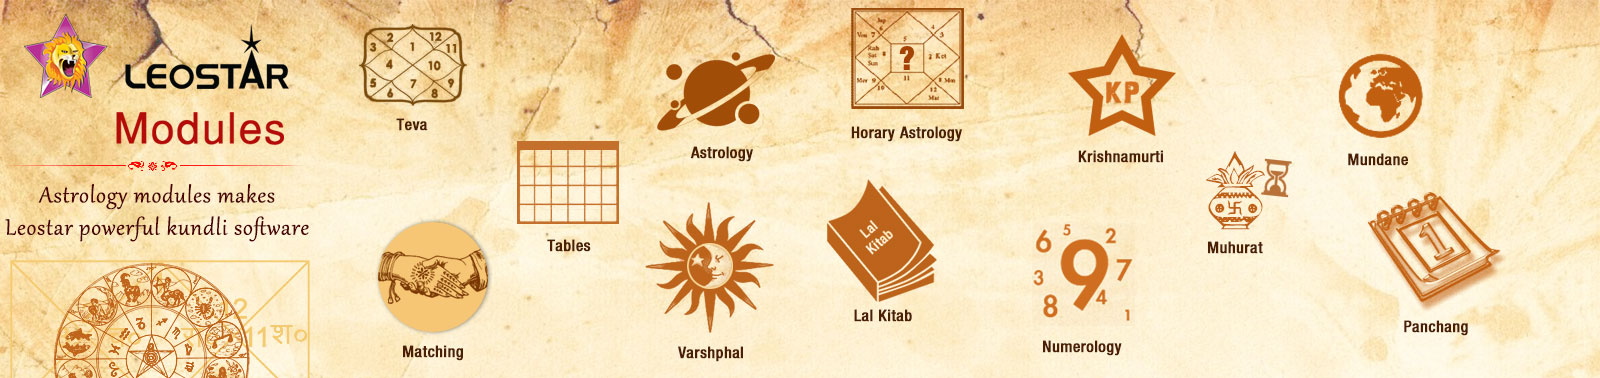 Astrology software modules